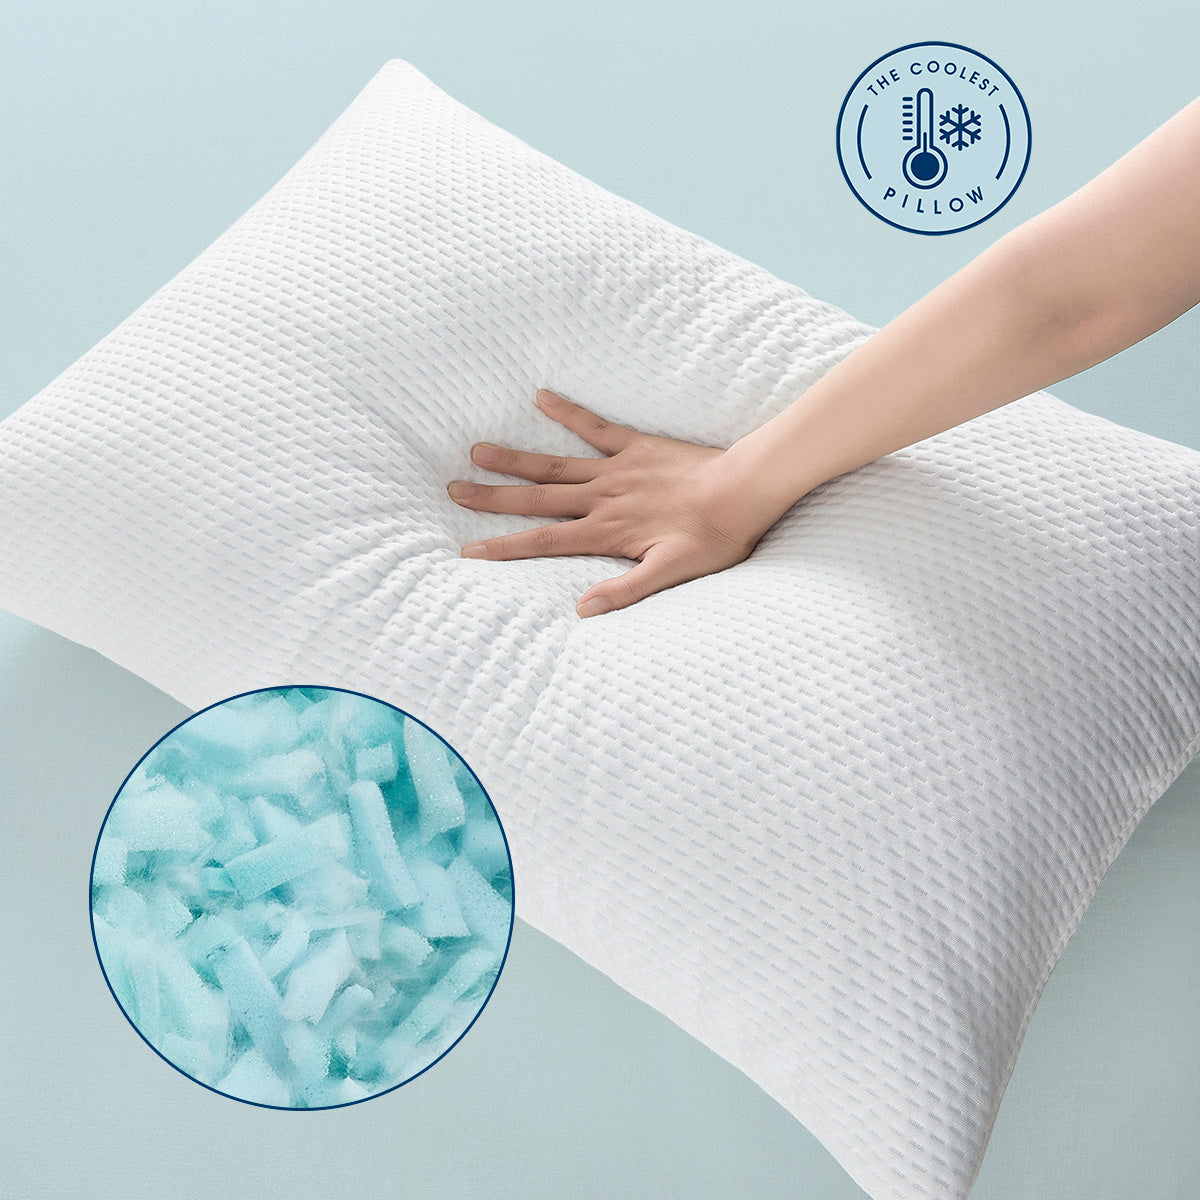 5 benefits of sleeping on a shredded memory foam pillow